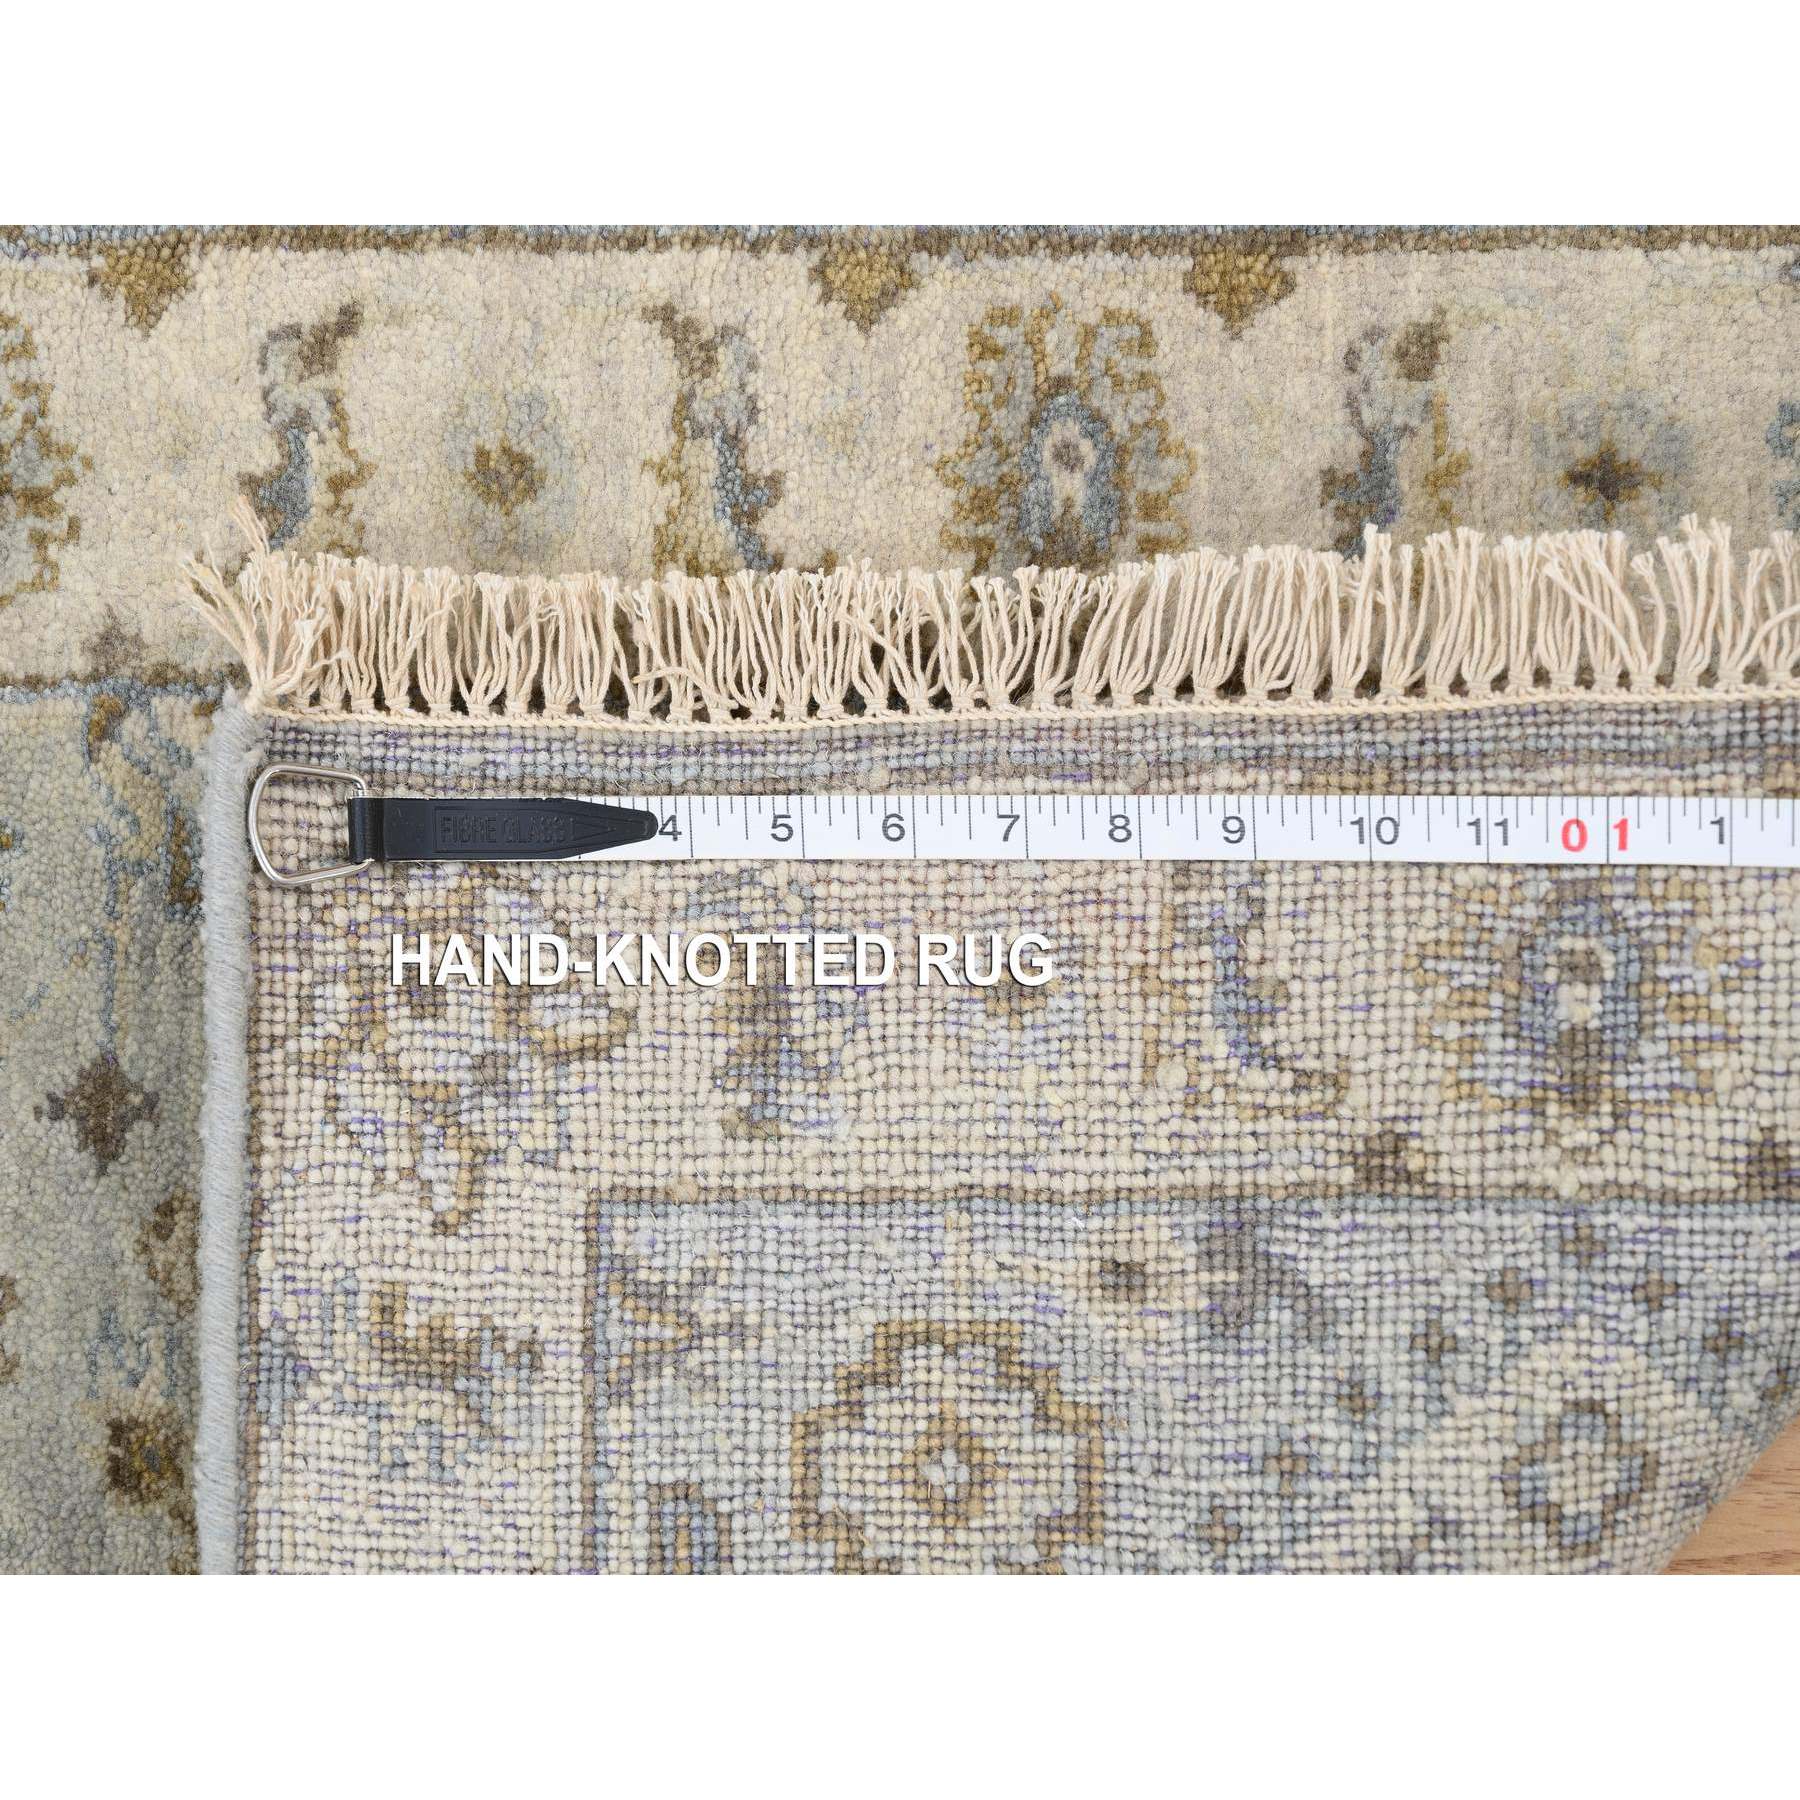 2'1"x3' Gray-Ivory Karajeh Design Soft Organic Wool Hand Woven Oriental Mat Rug 